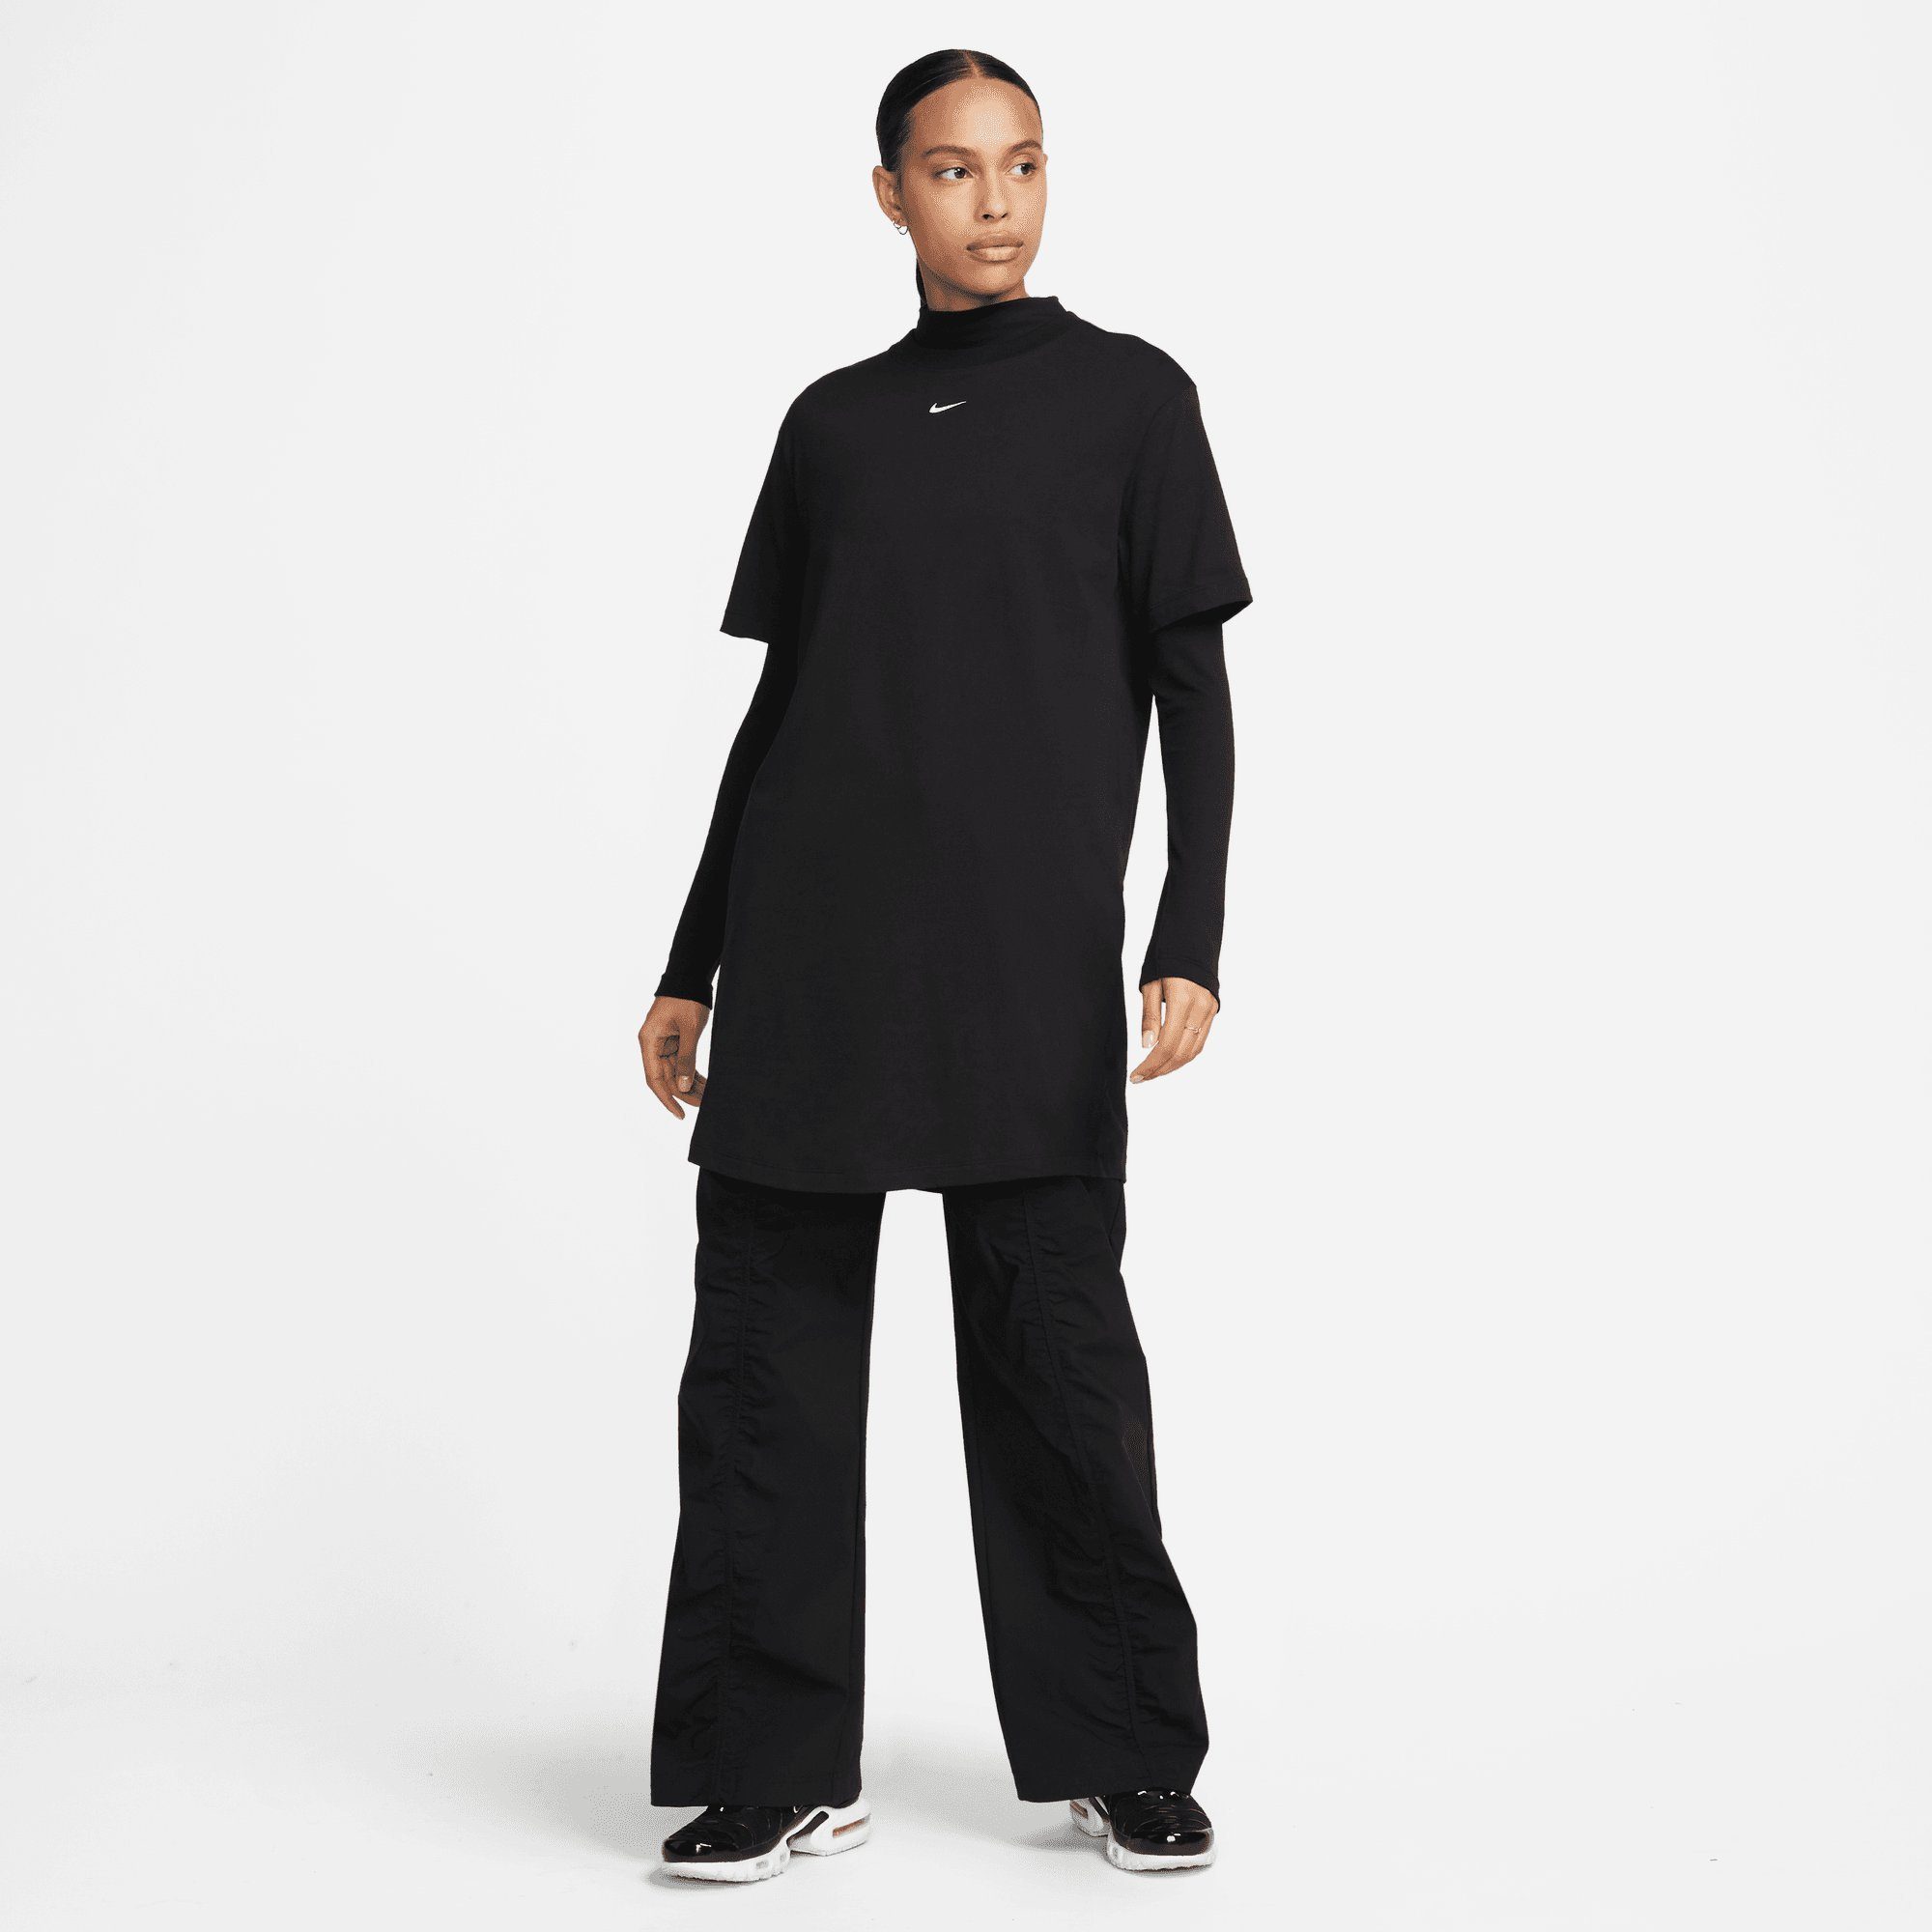 DRESS Sportswear WOMEN'S Nike Sommerkleid SHORT-SLEEVE BLACK/WHITE ESSENTIAL